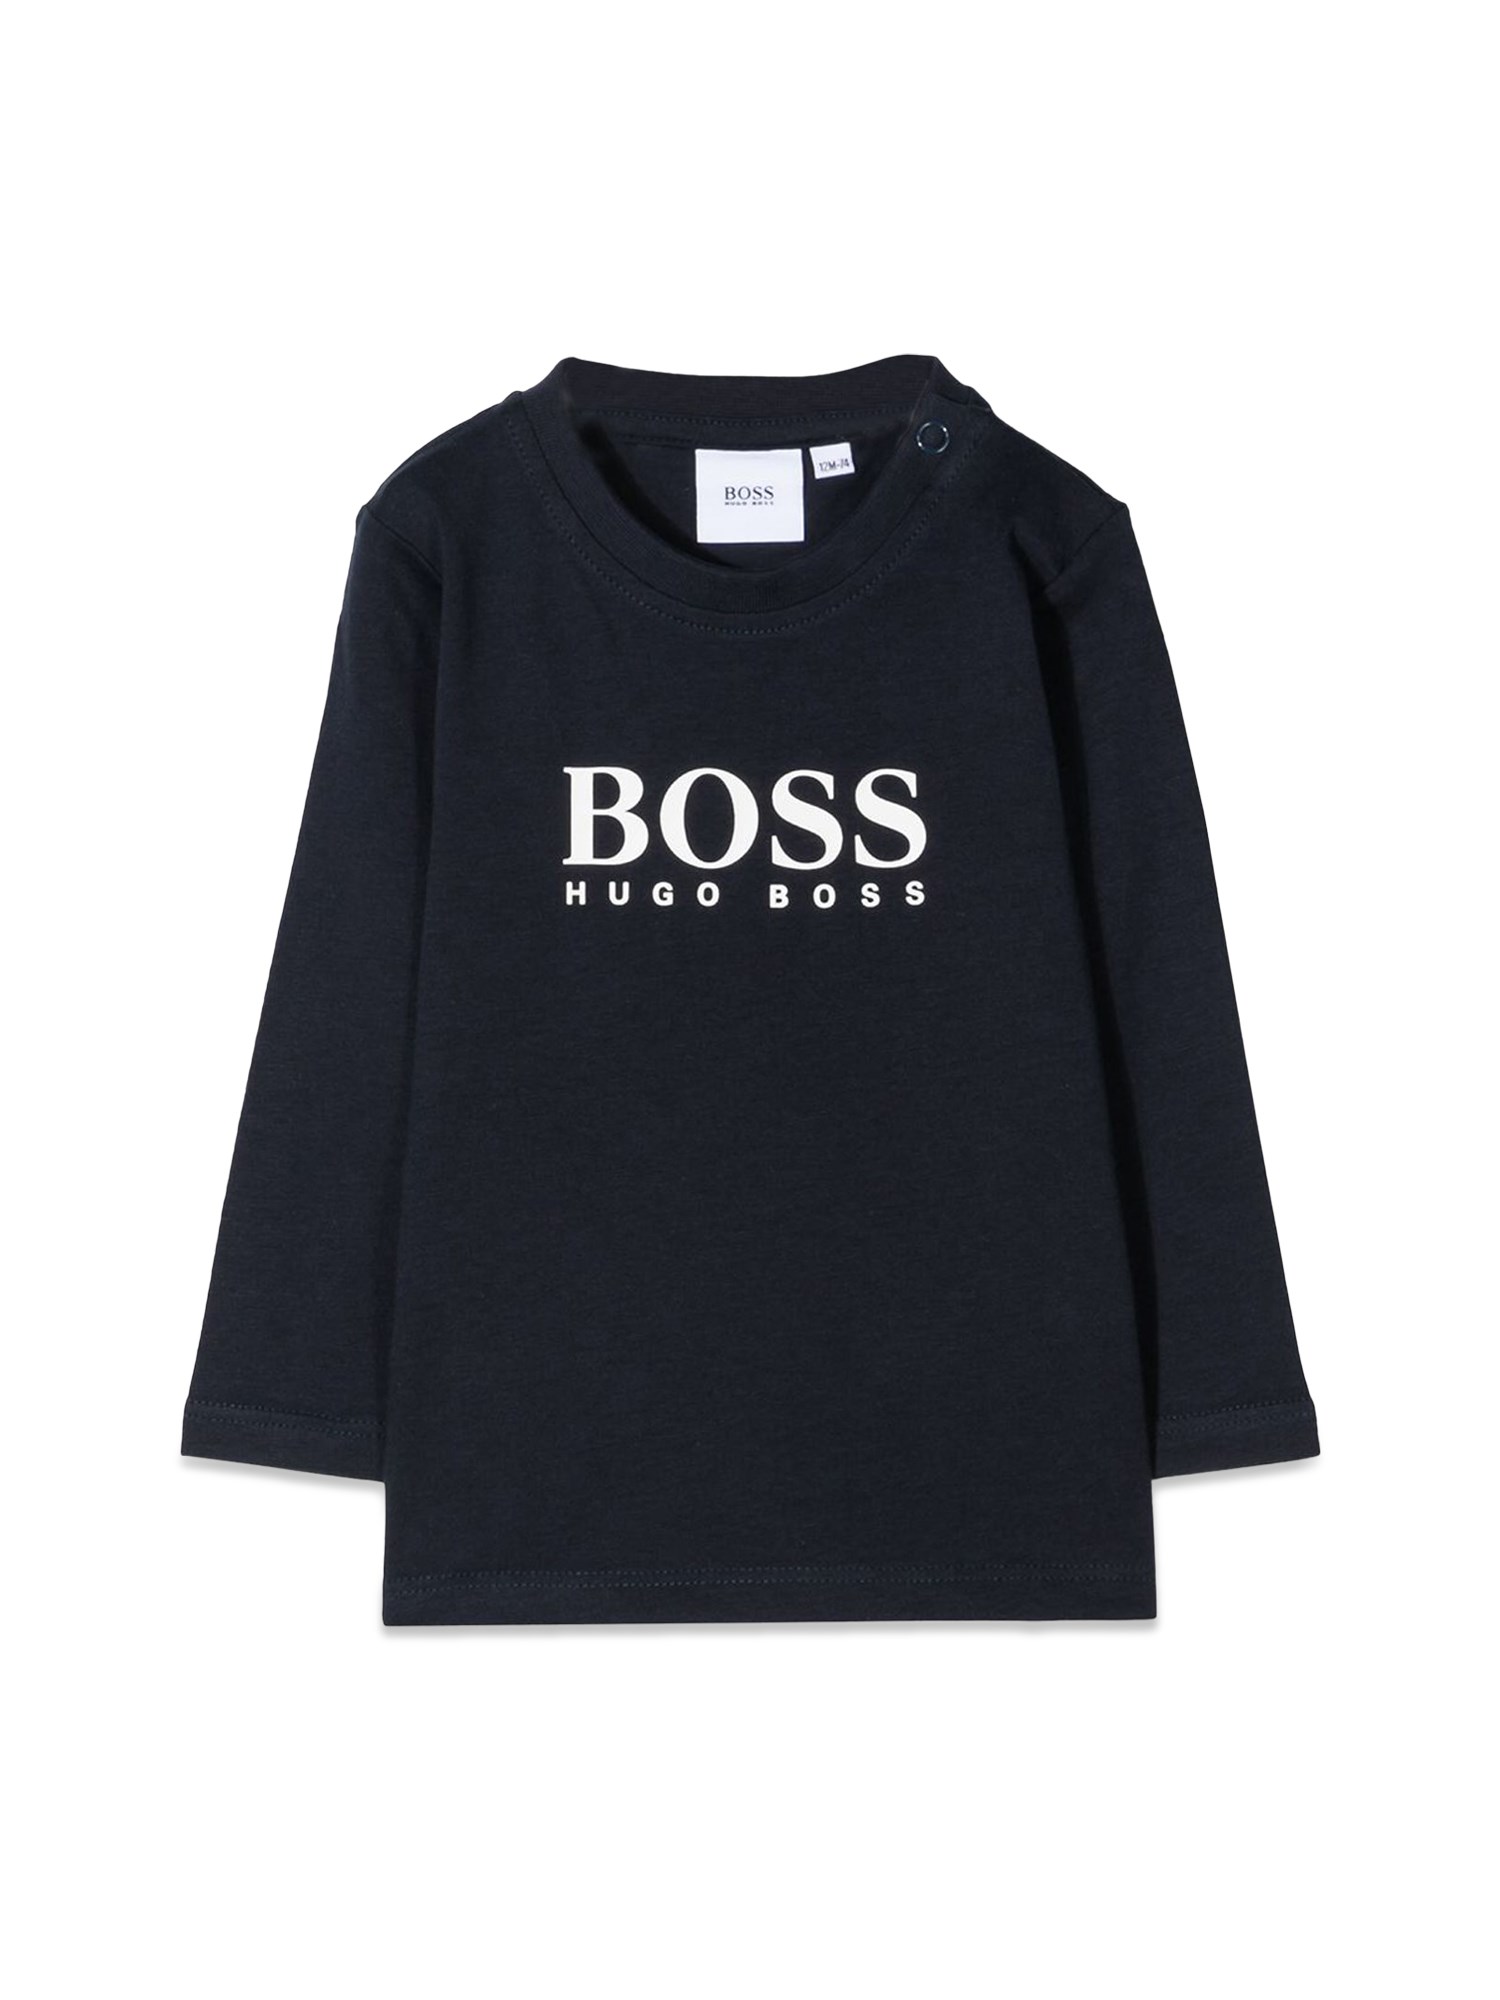 BOSS boss long sleeve tee shirt